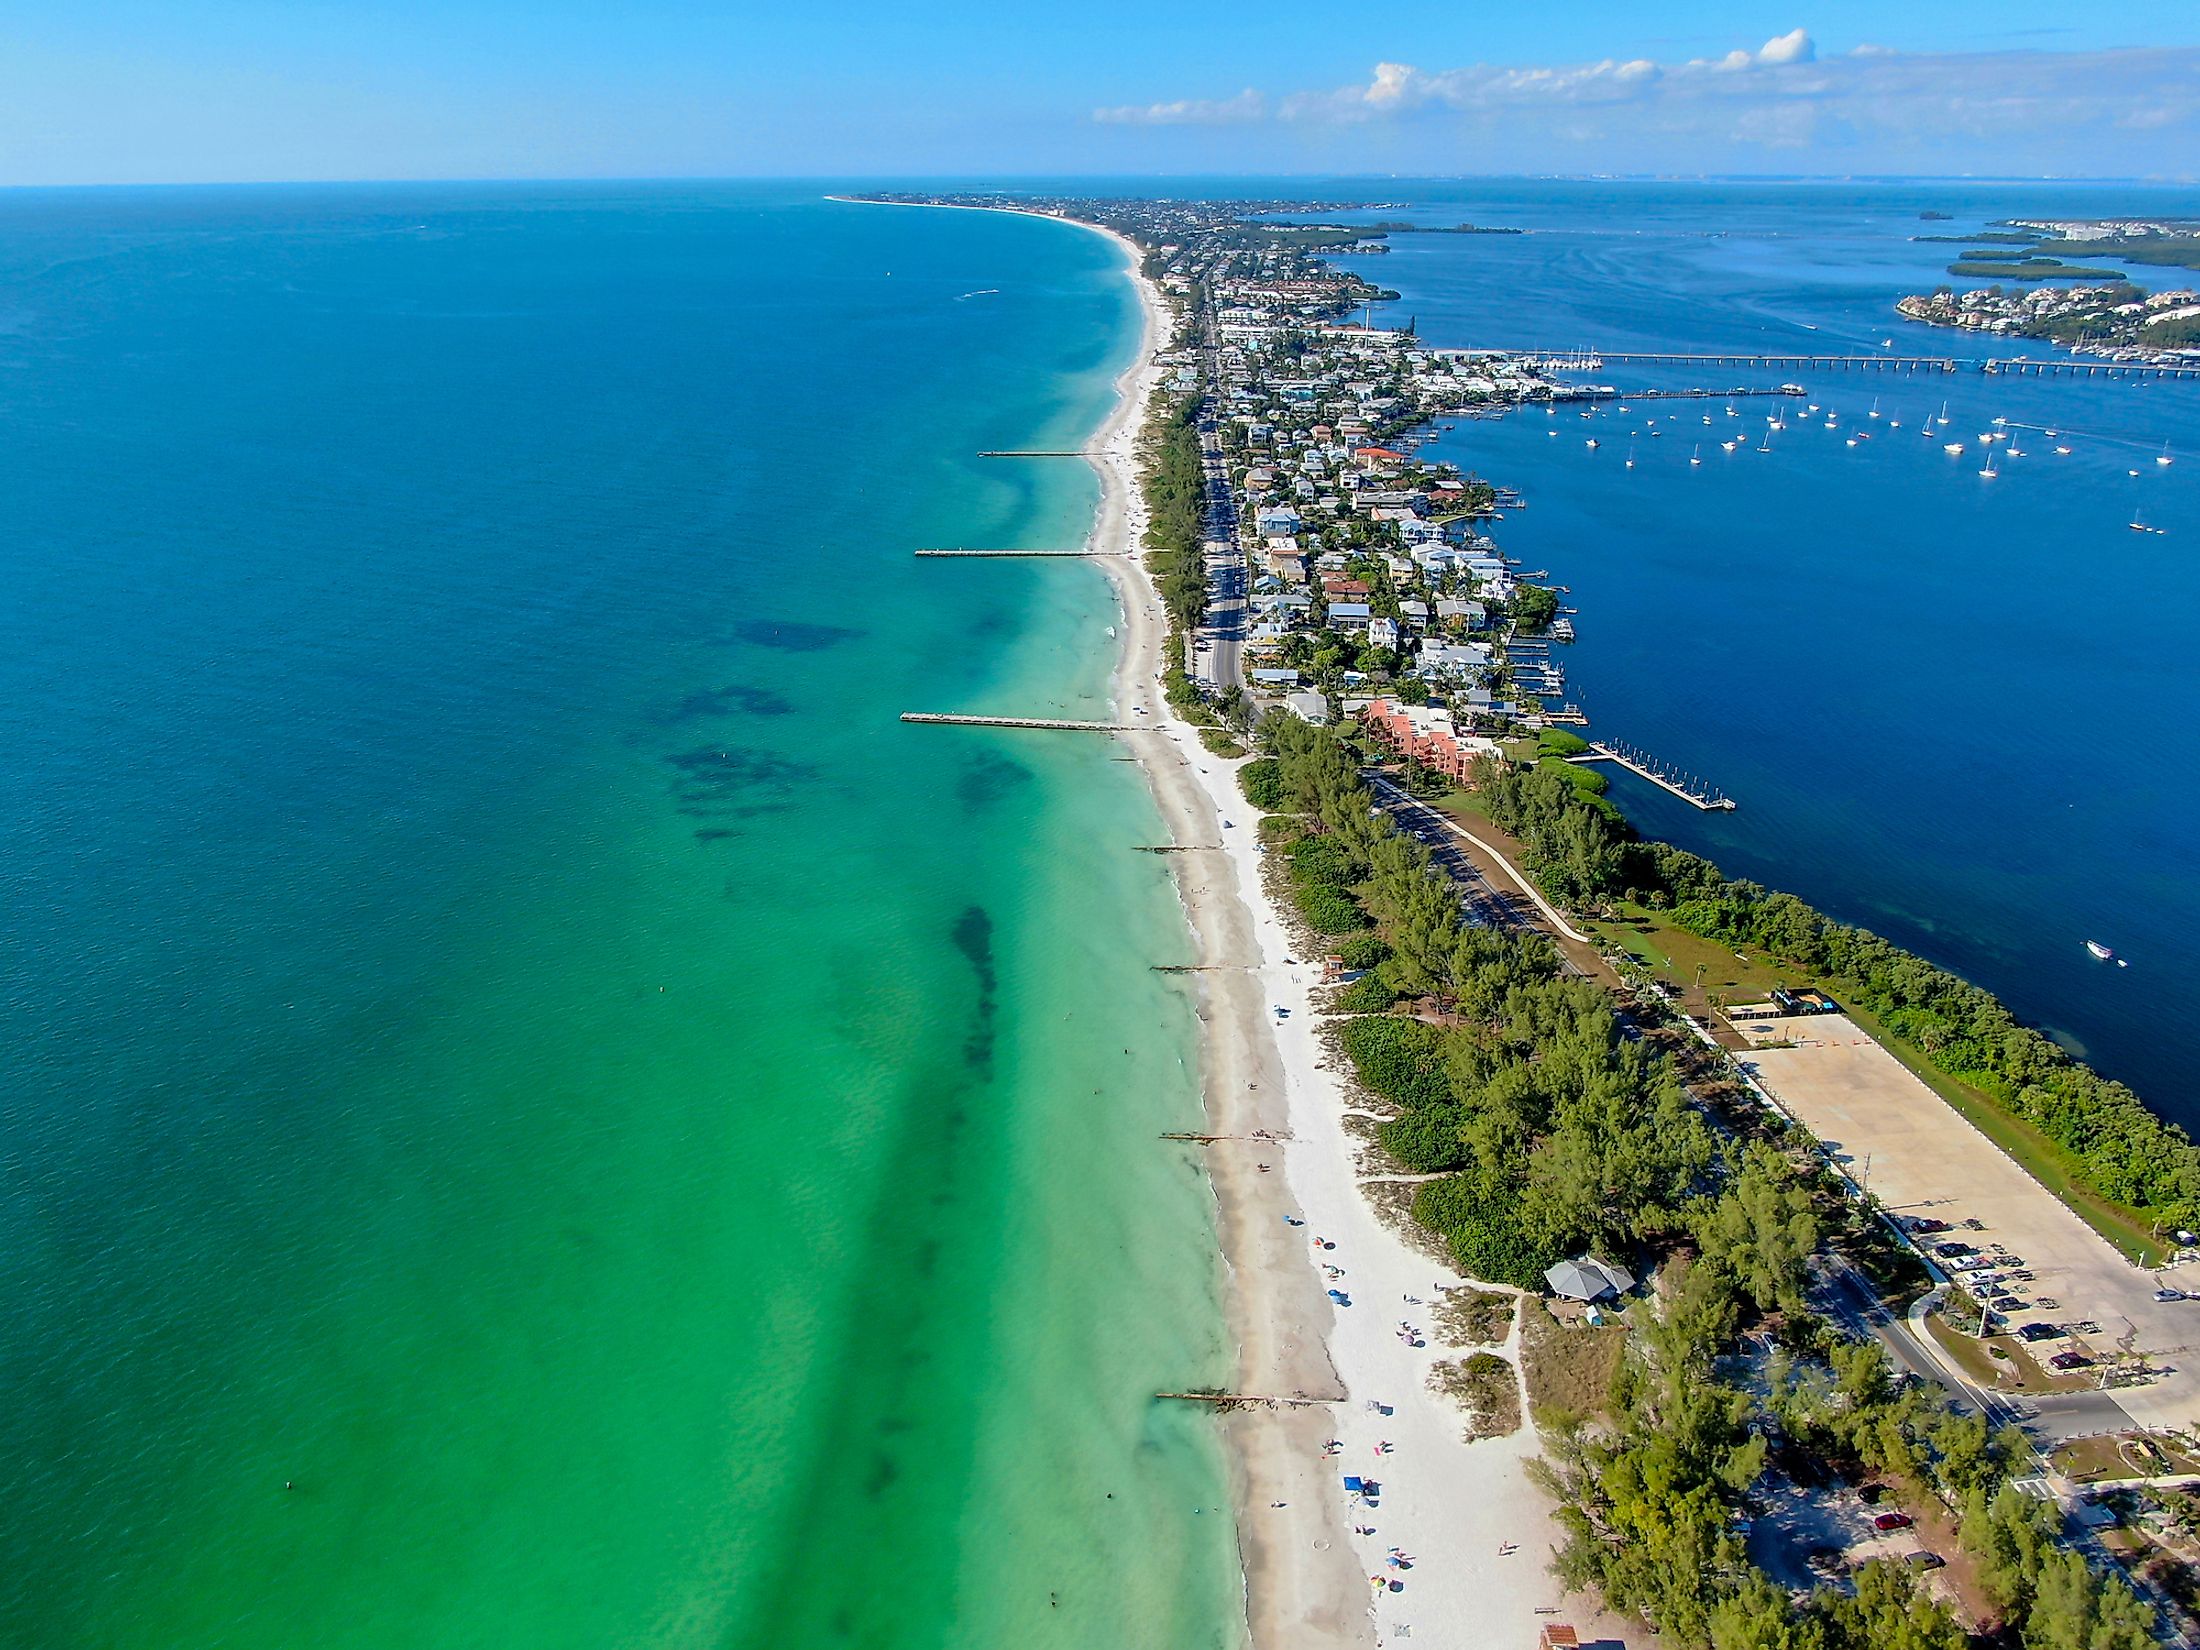 Aerial view of Coquina Beach with white sand beach and the main road, Anna Maria Island, Florida.